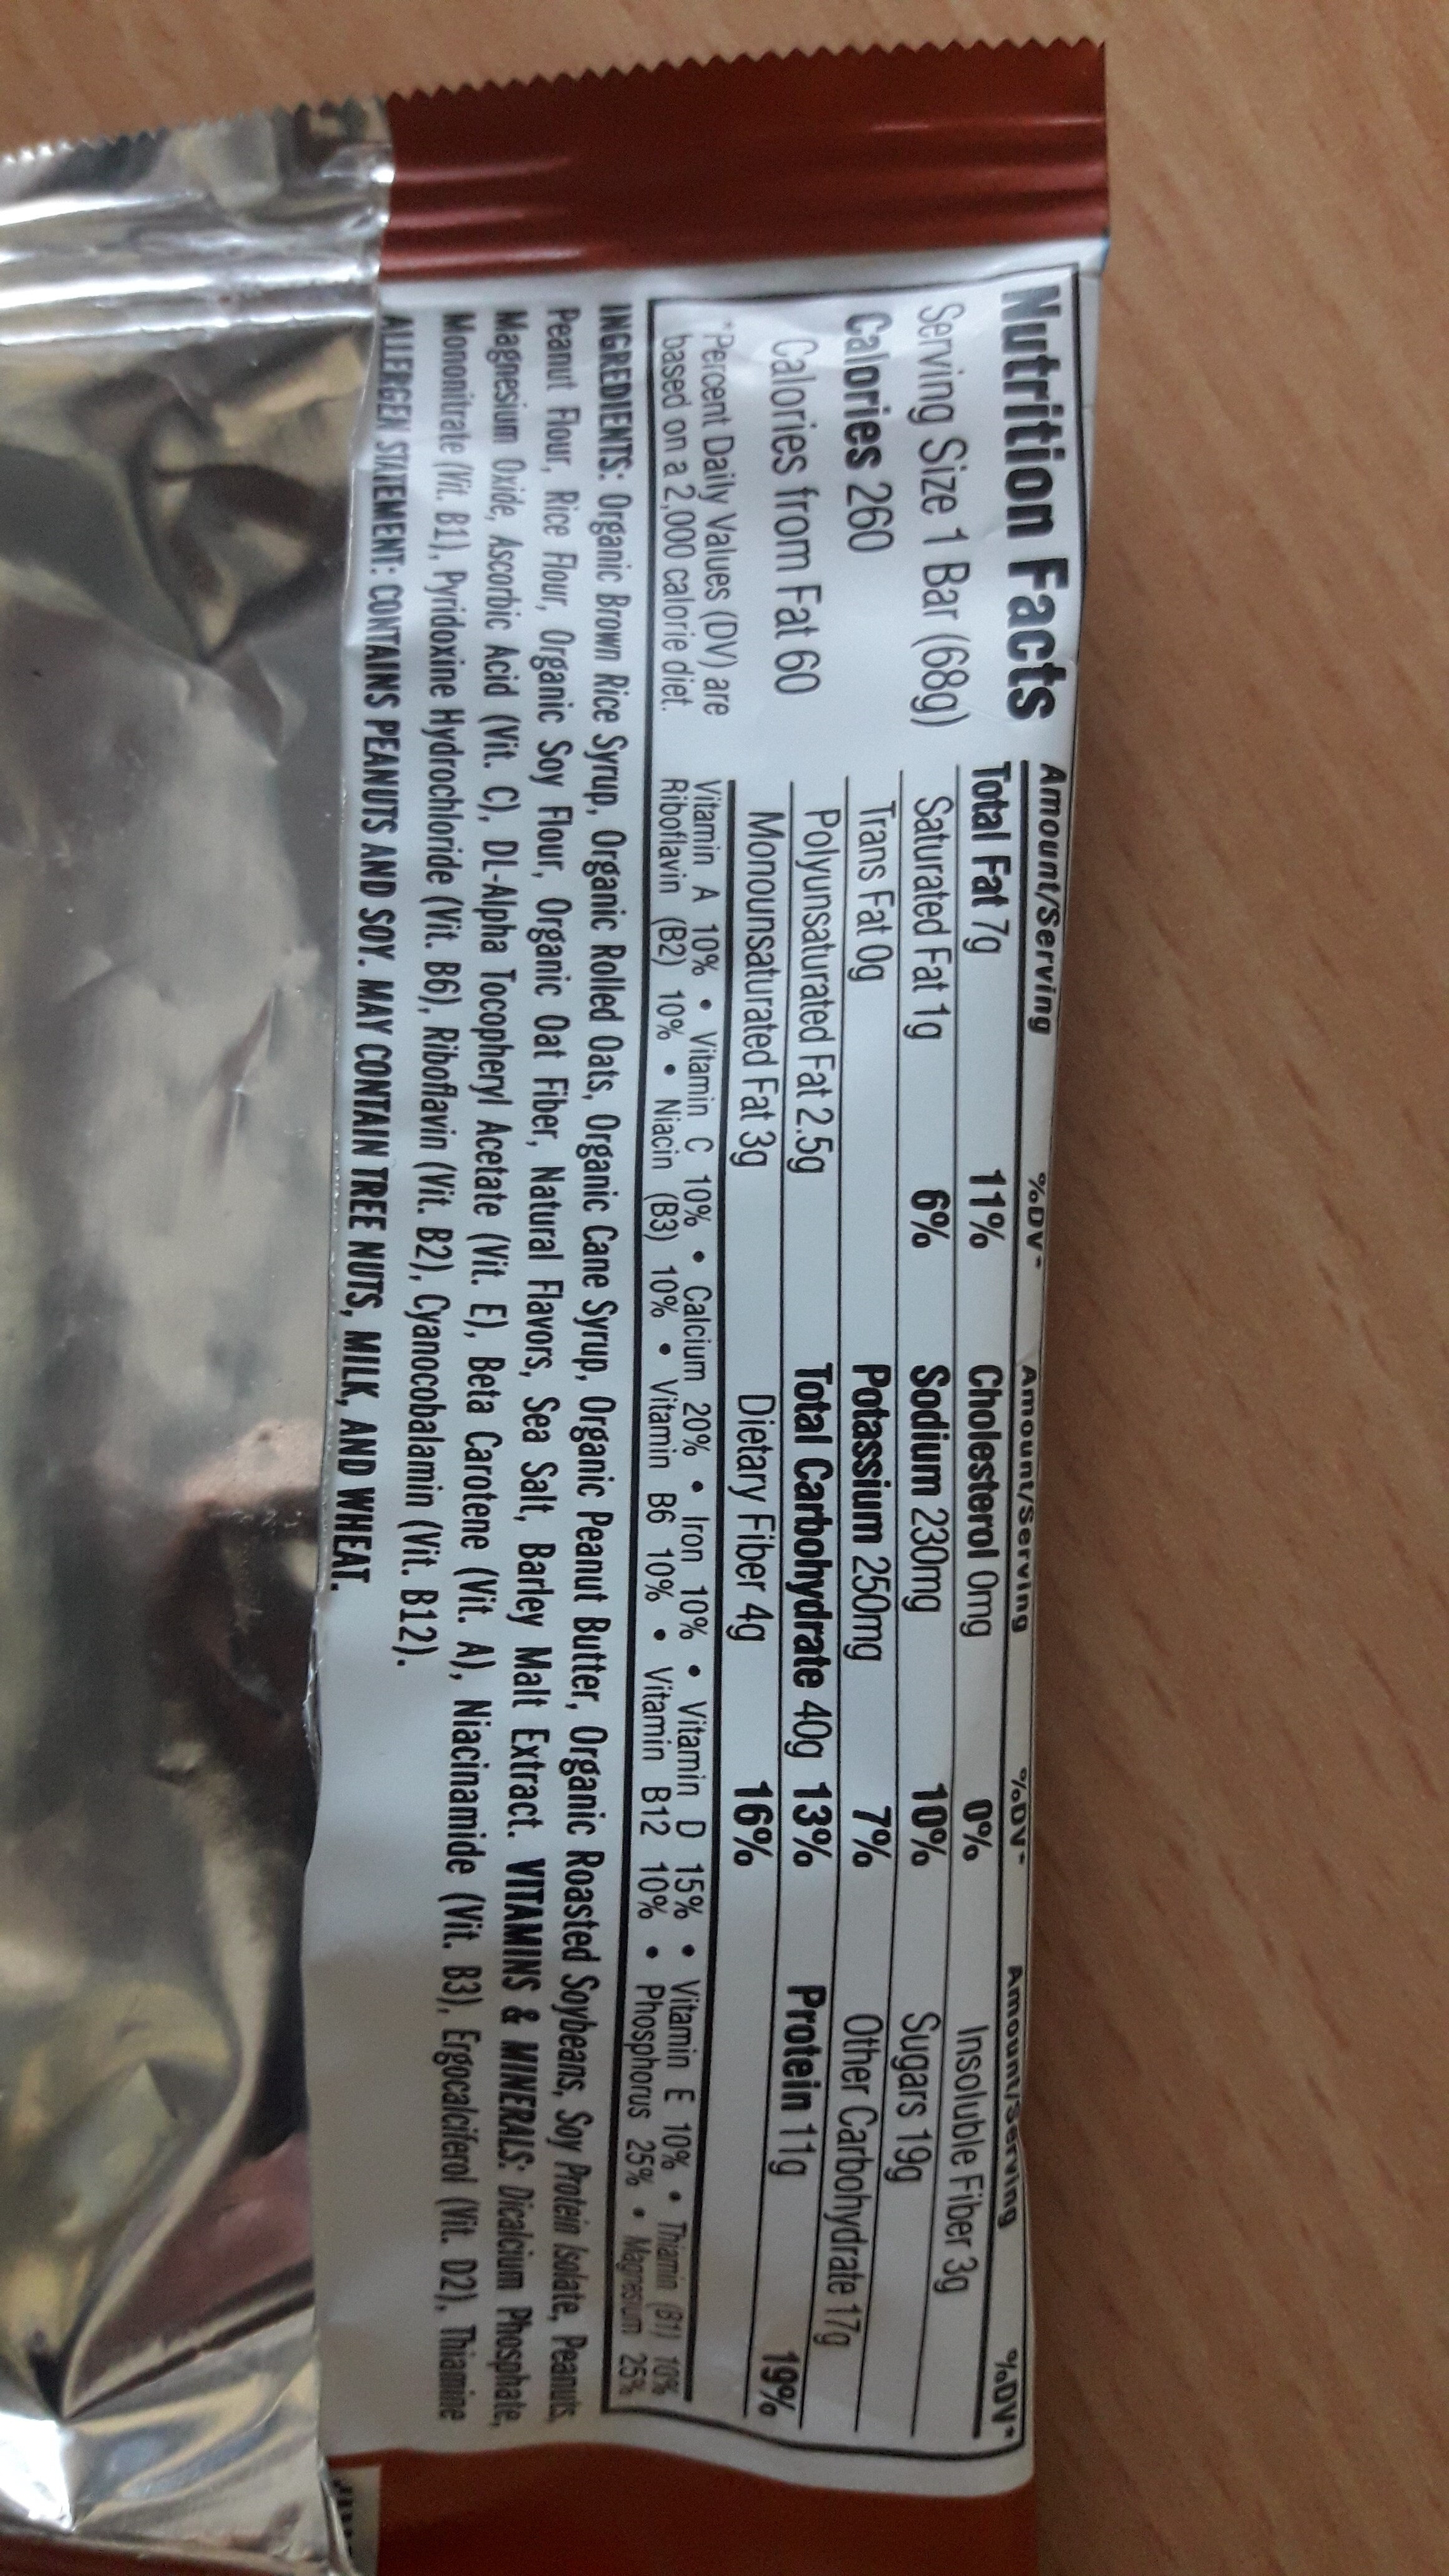 Energy bars crunchy peanut butter ounce protein bars - Ingrediënten - en